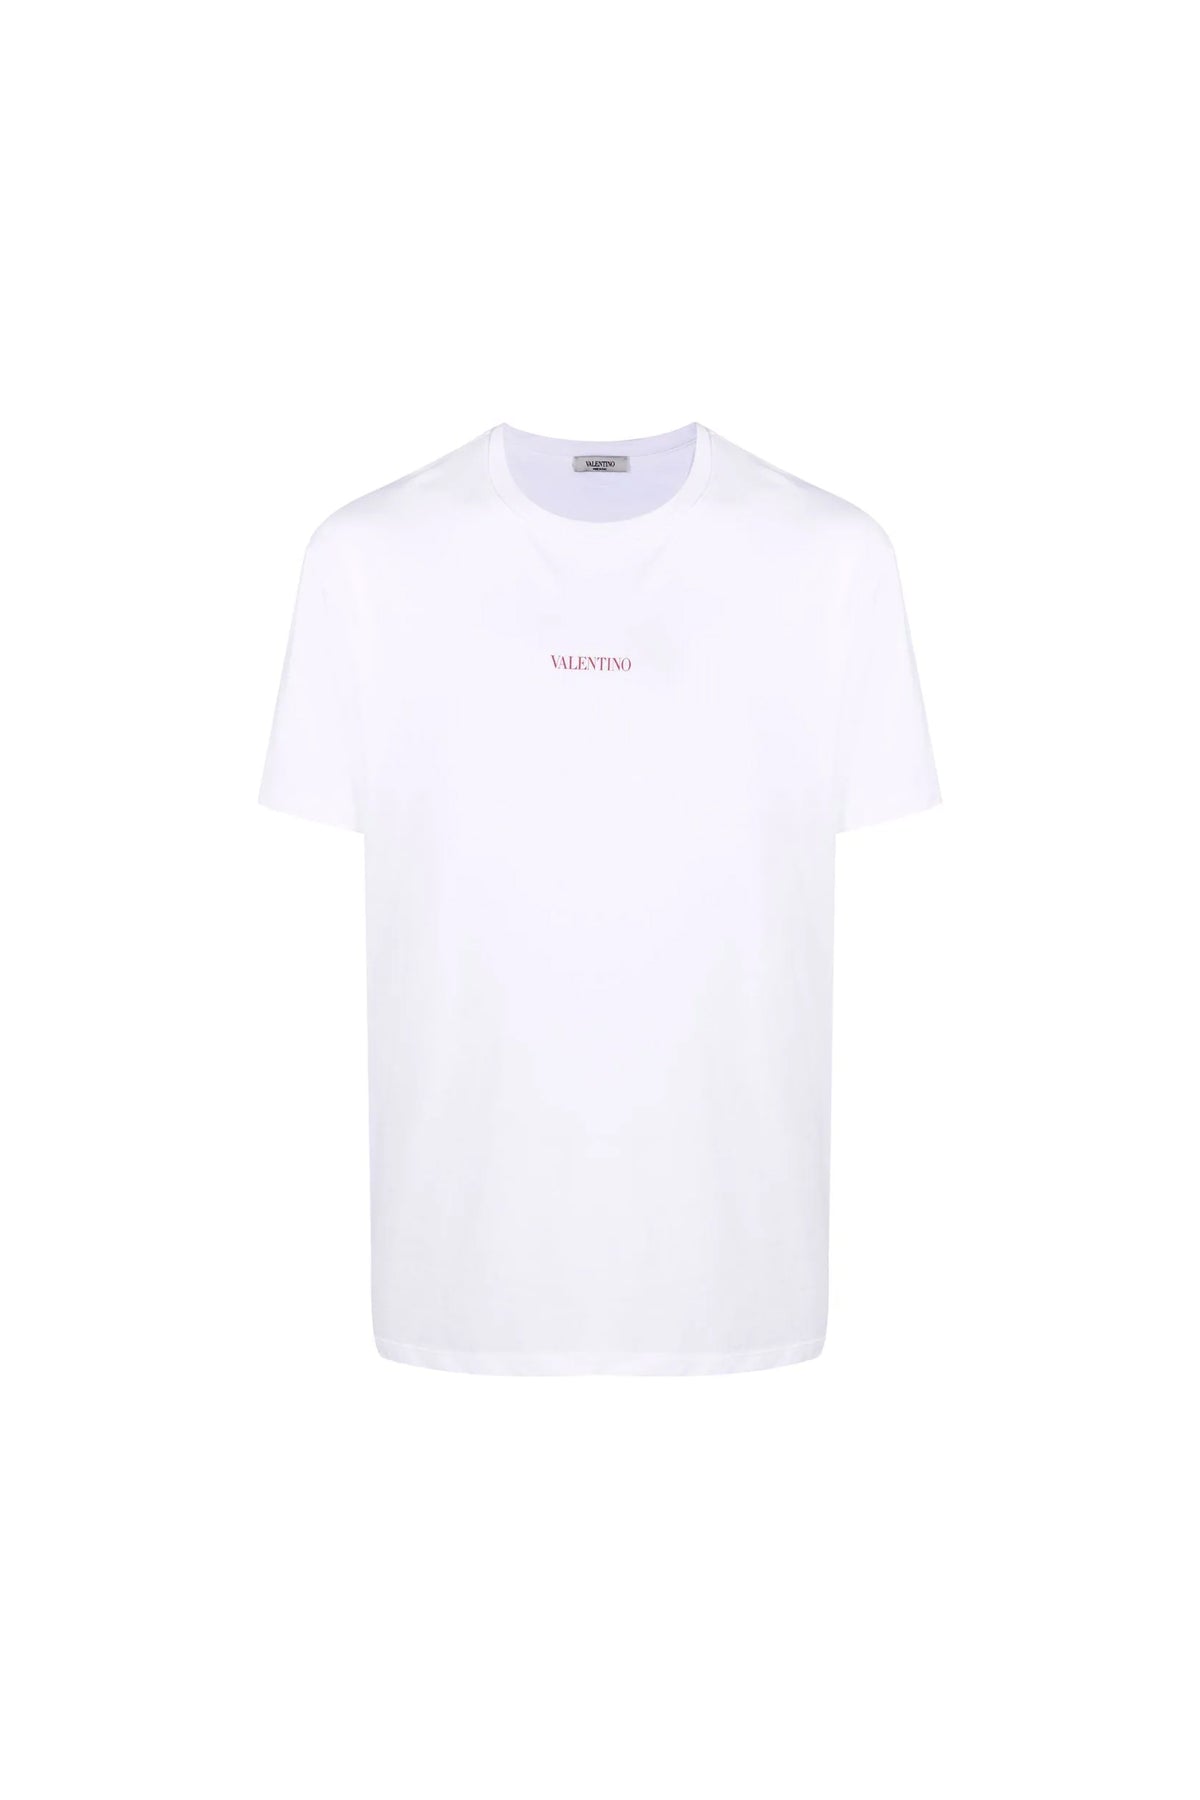 Valentino White Red-Logo T-Shirt